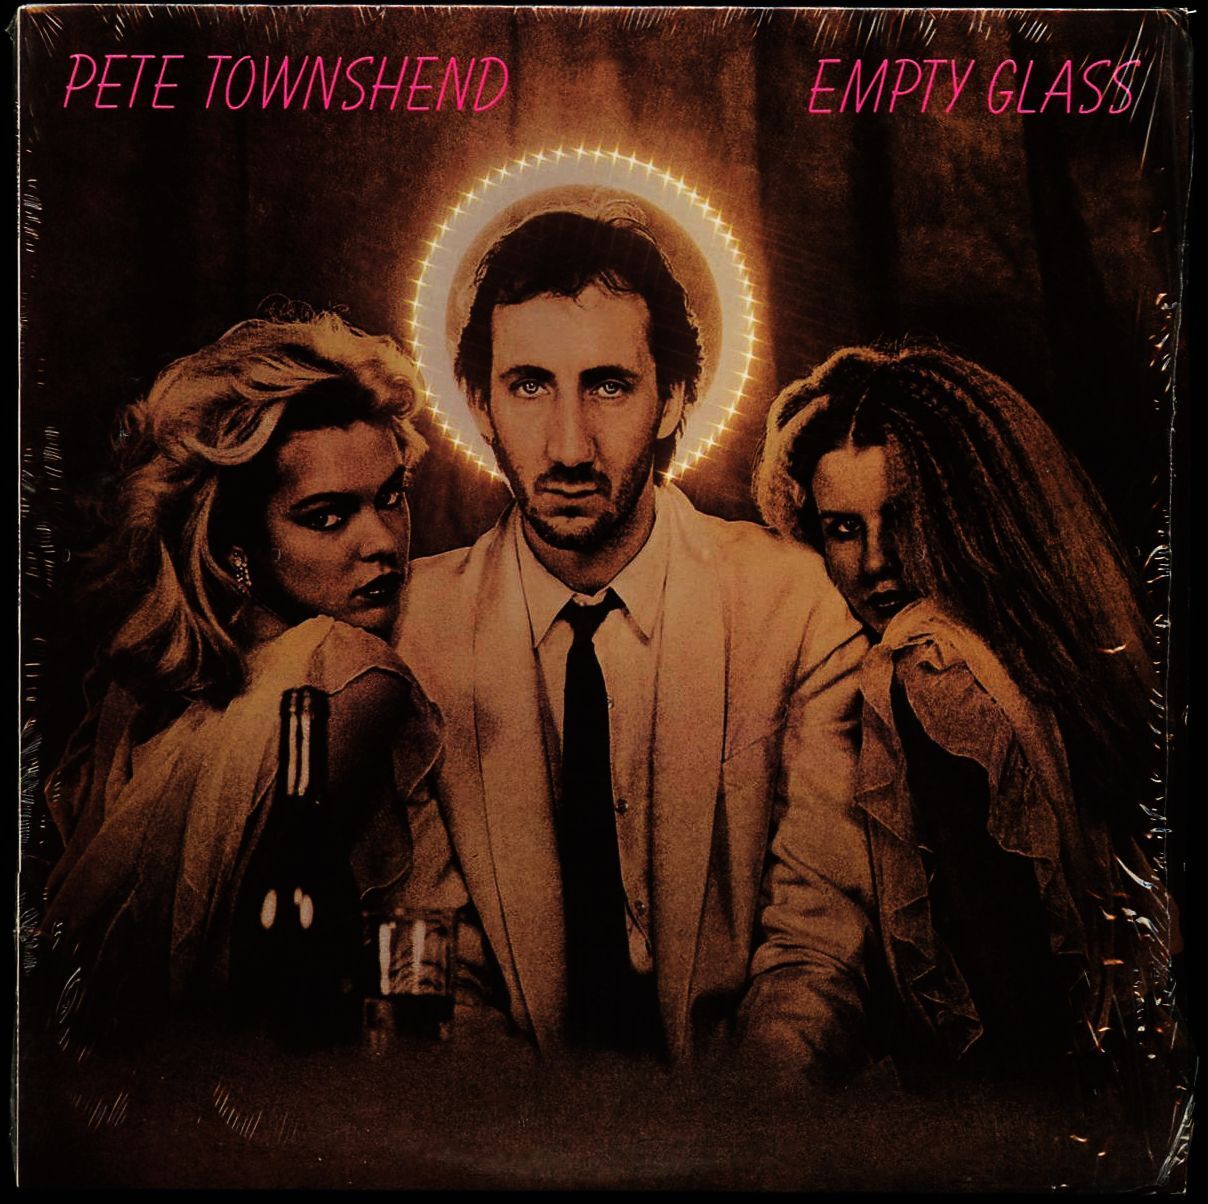 VINYL LP Pete Townshend - Empty Glass / Atco Columbia / shrinkwrap VG++